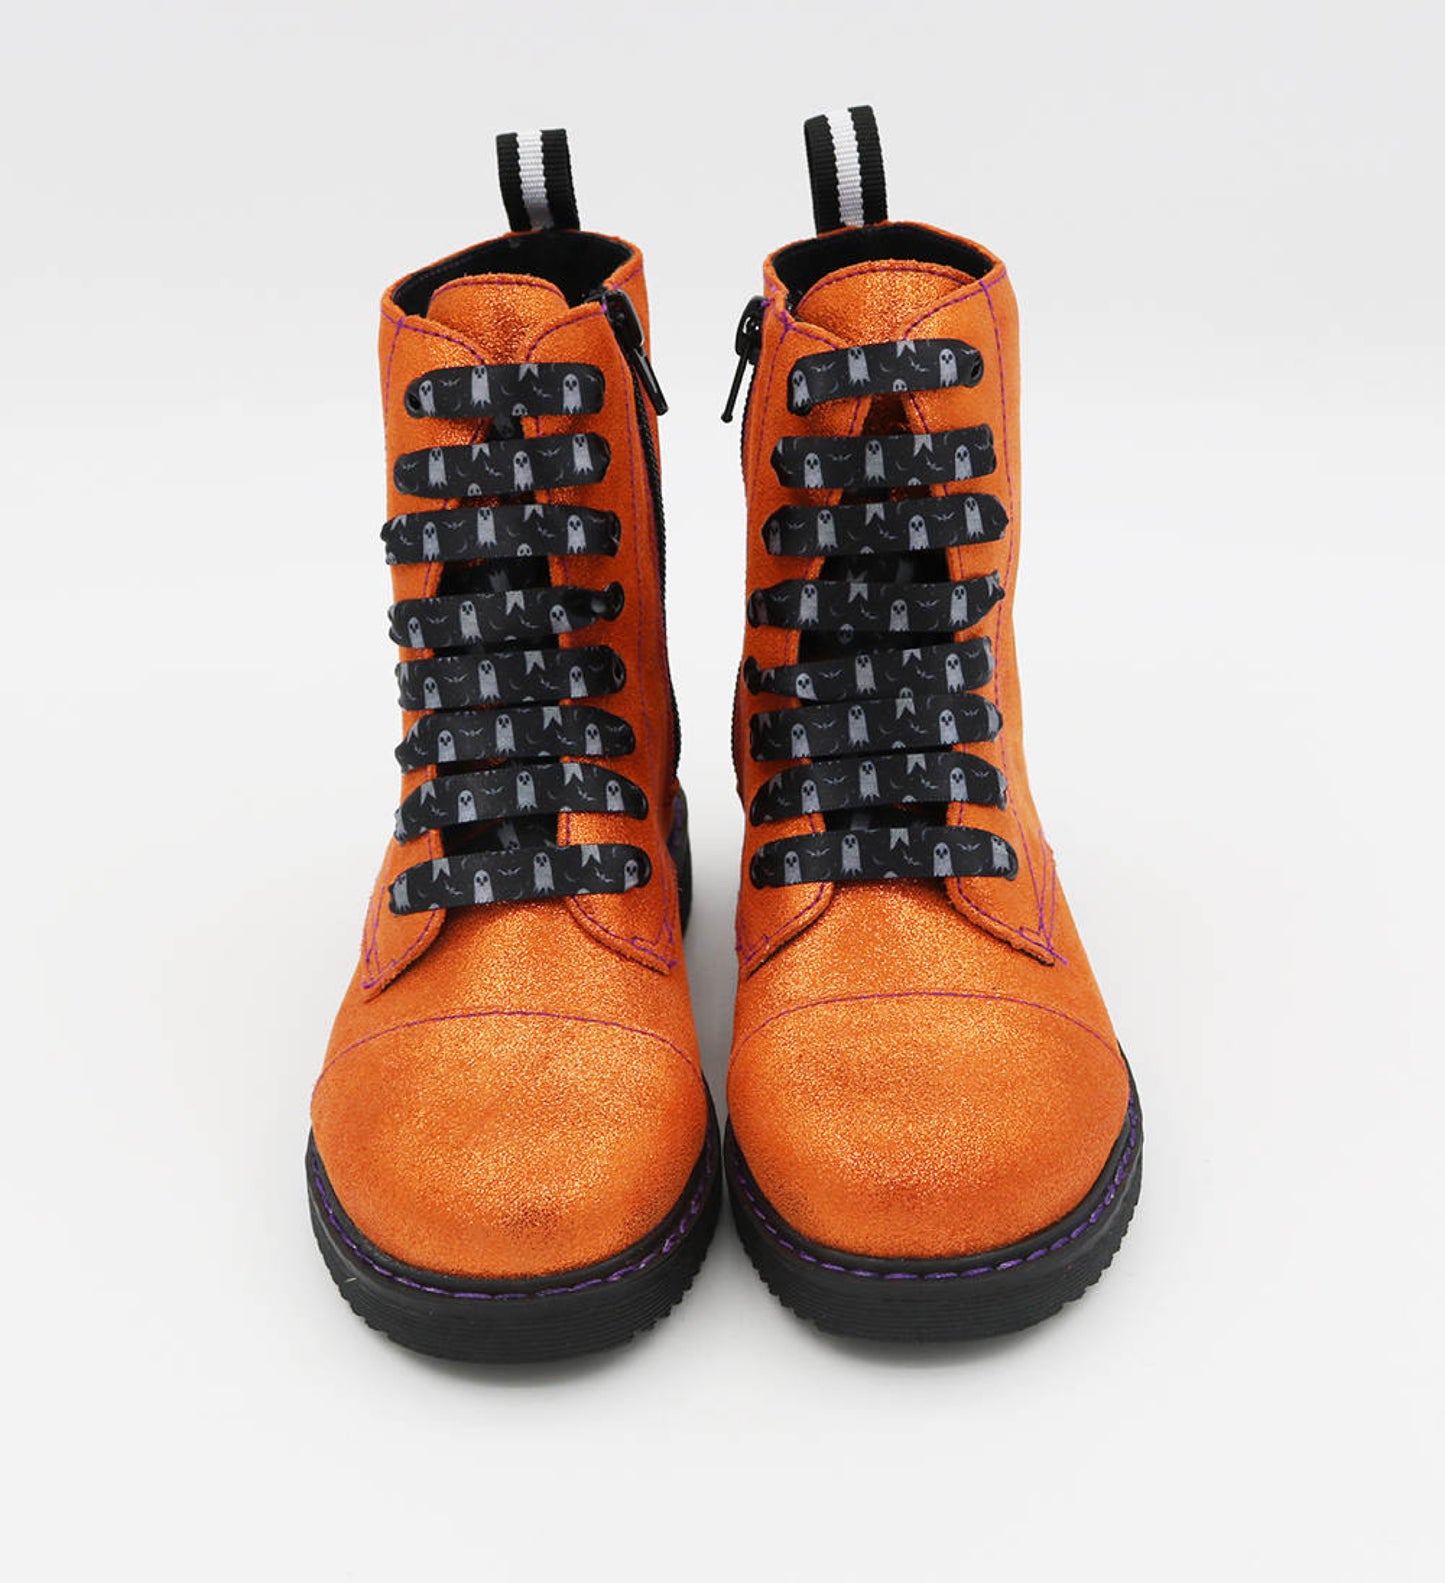 Enchanted Orange Hocus Pocus Shimmer Combat Boots w/ Ghostie + Black Laces